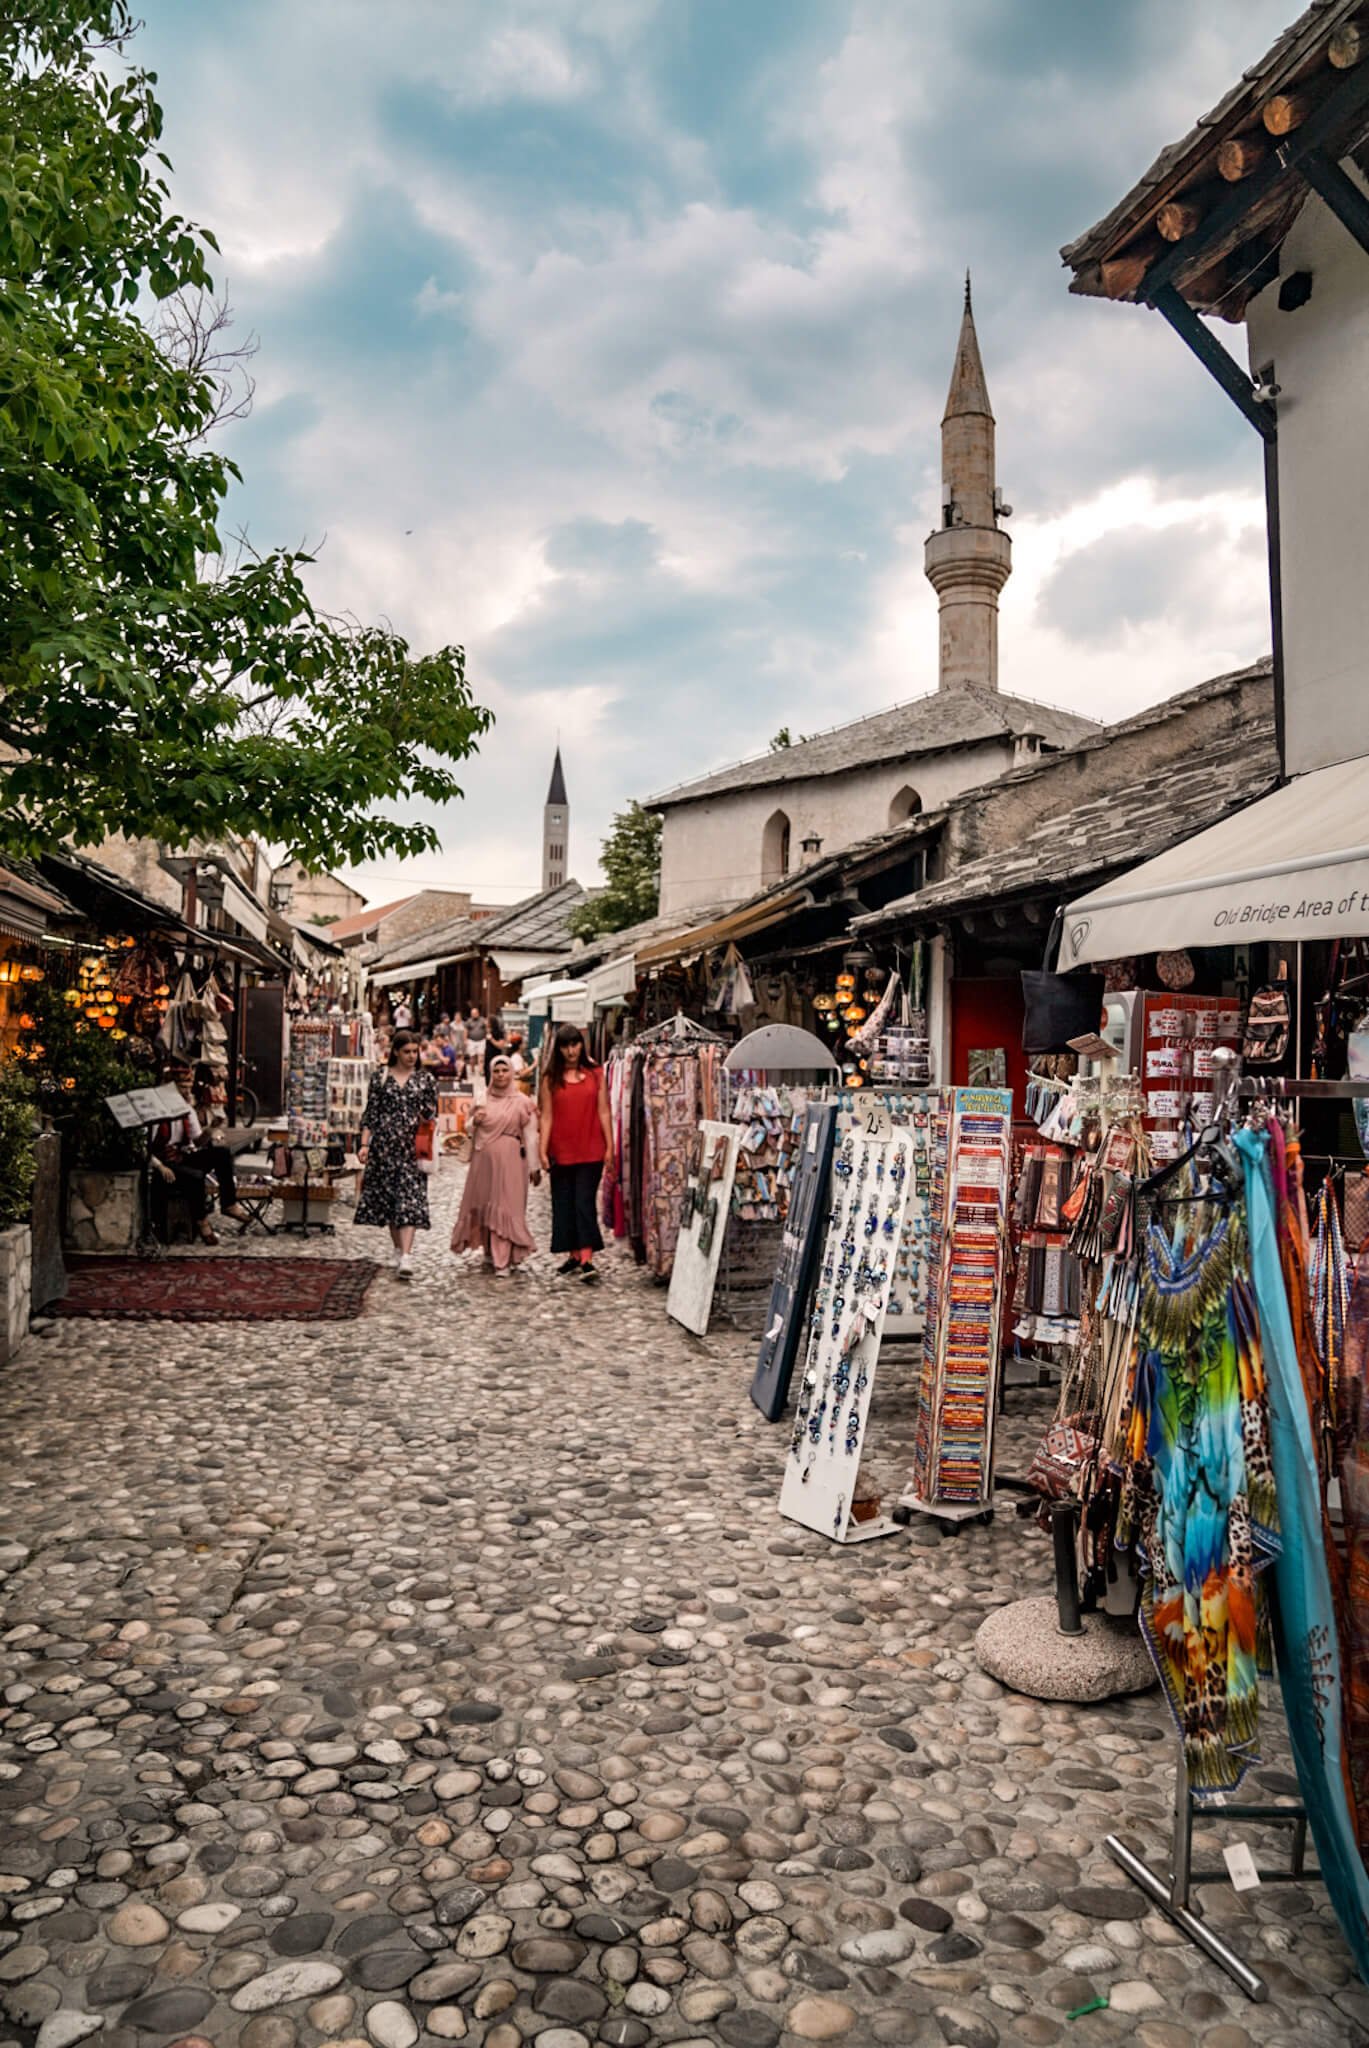 Mostar Bazaar, Bosnia & Herzegovina